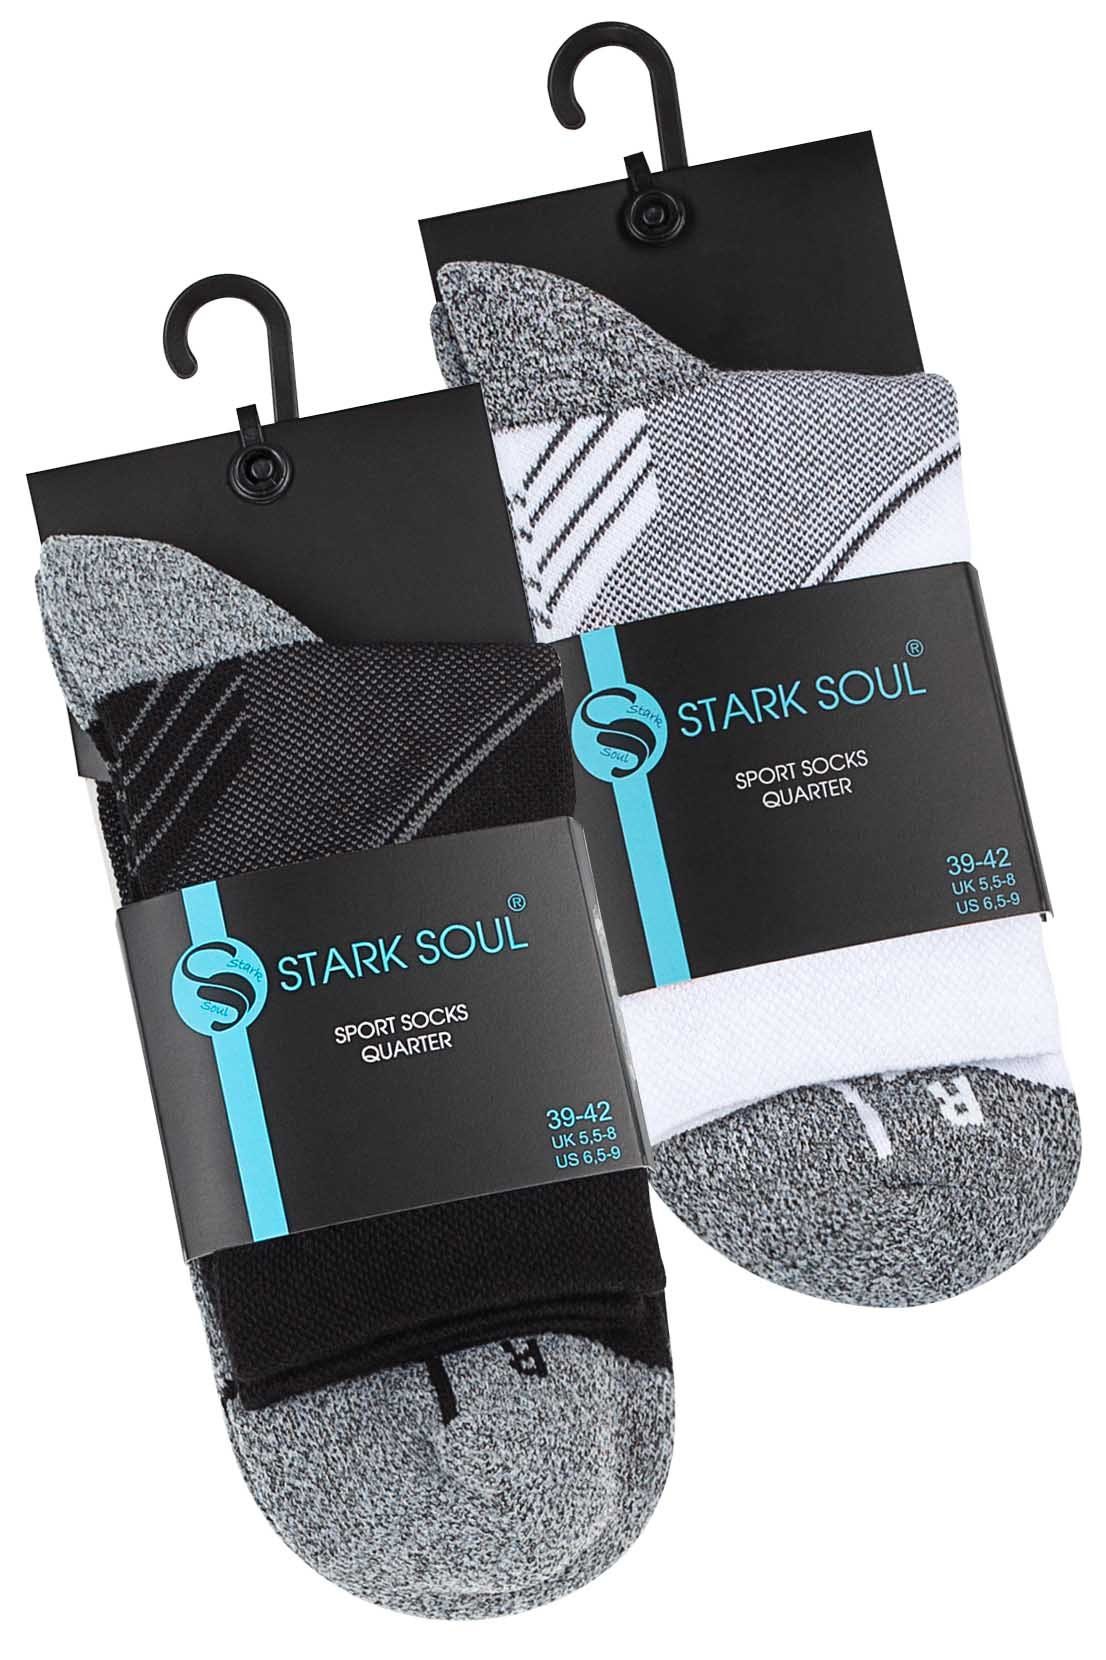 Stark Soul® Laufsocken Quarter Paar) - Performance schwarz-weiss Sohle 2 Gepolsterte (2 Laufsocken Paar Socken, Sport